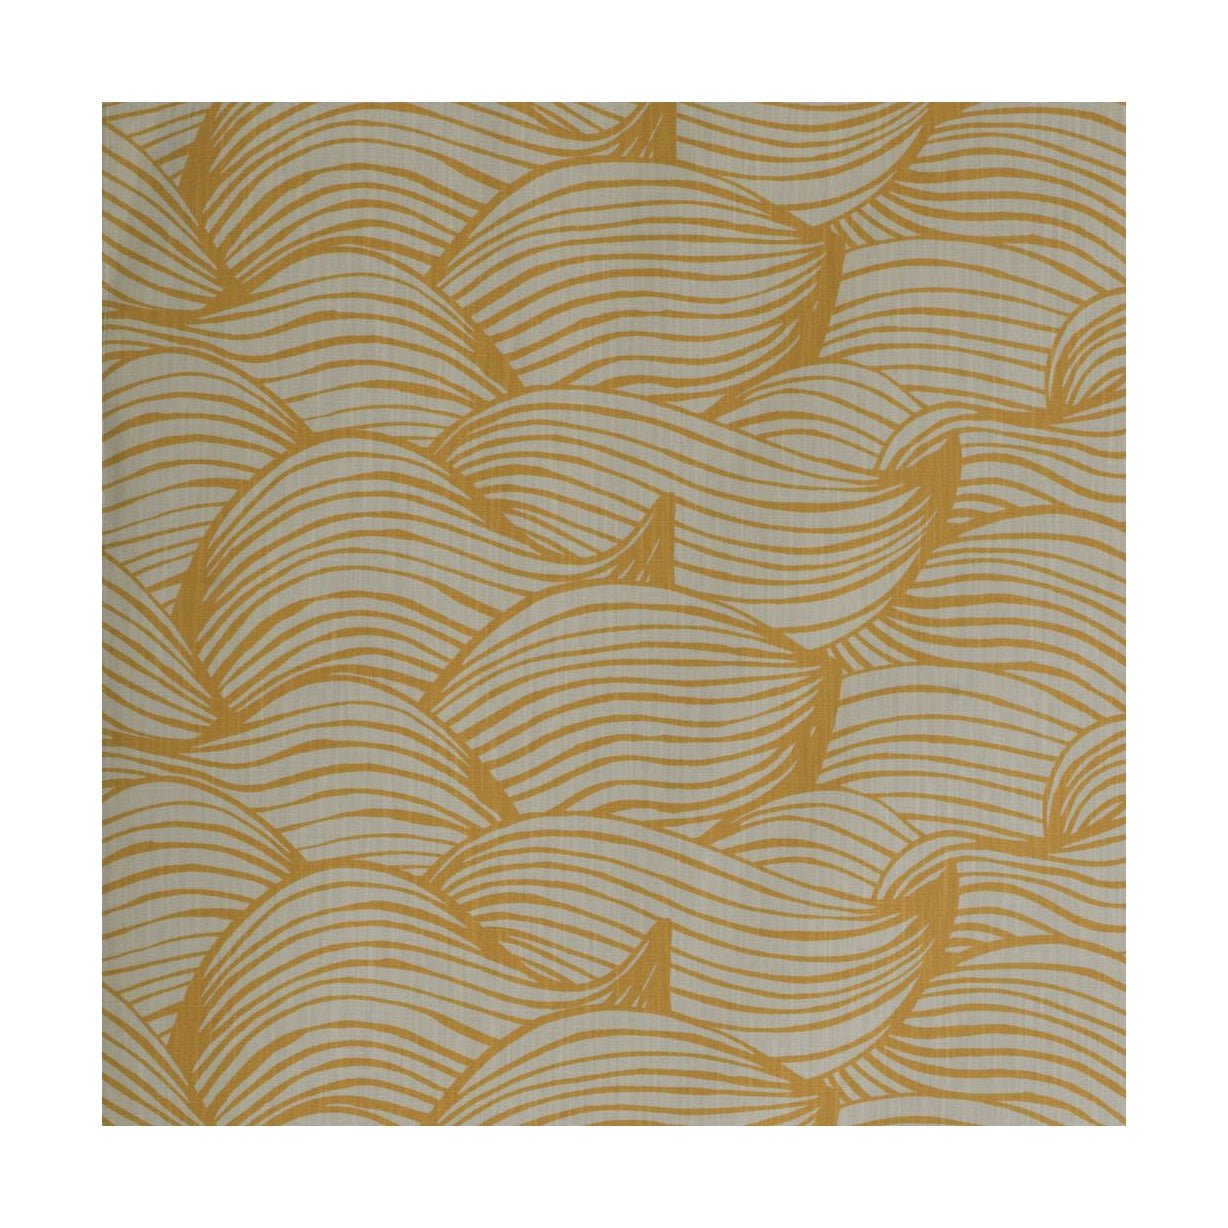 Spira Wave CTC -stof met acrylbreedte 145 cm (prijs per meter), honing